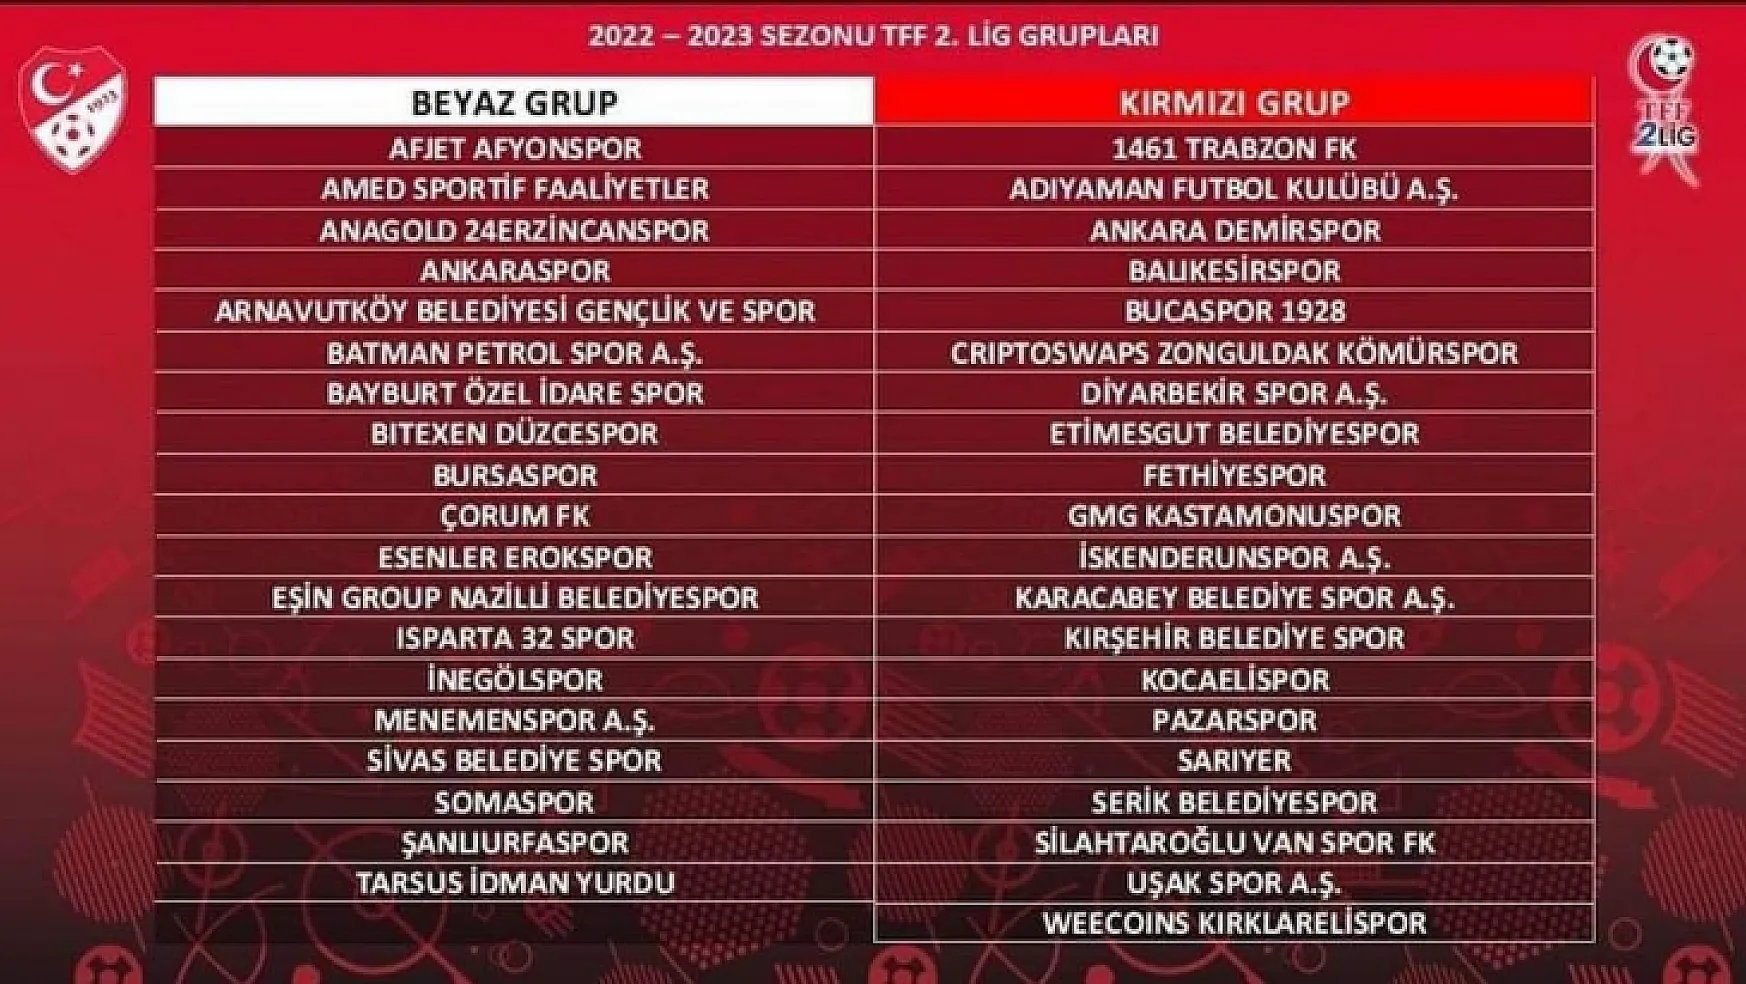 Fethiyespor 2. lig Kırmızı Grup'ta